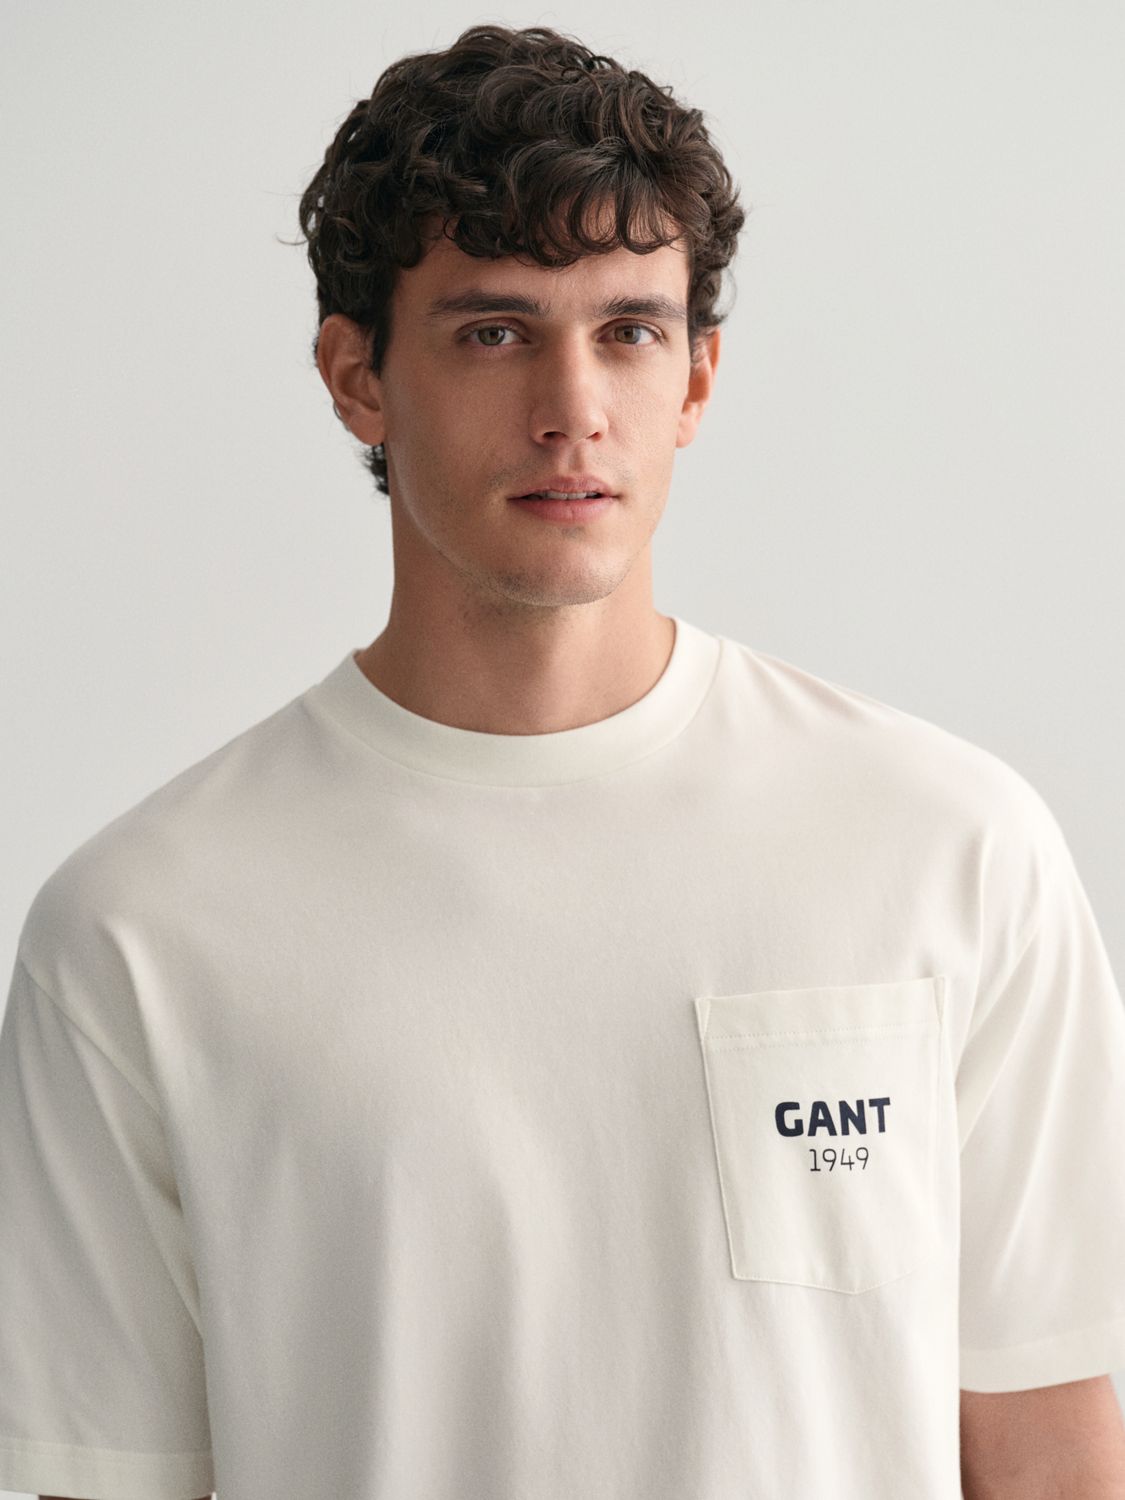 GANT Graphic Short Sleeve T-Shirt, White, L